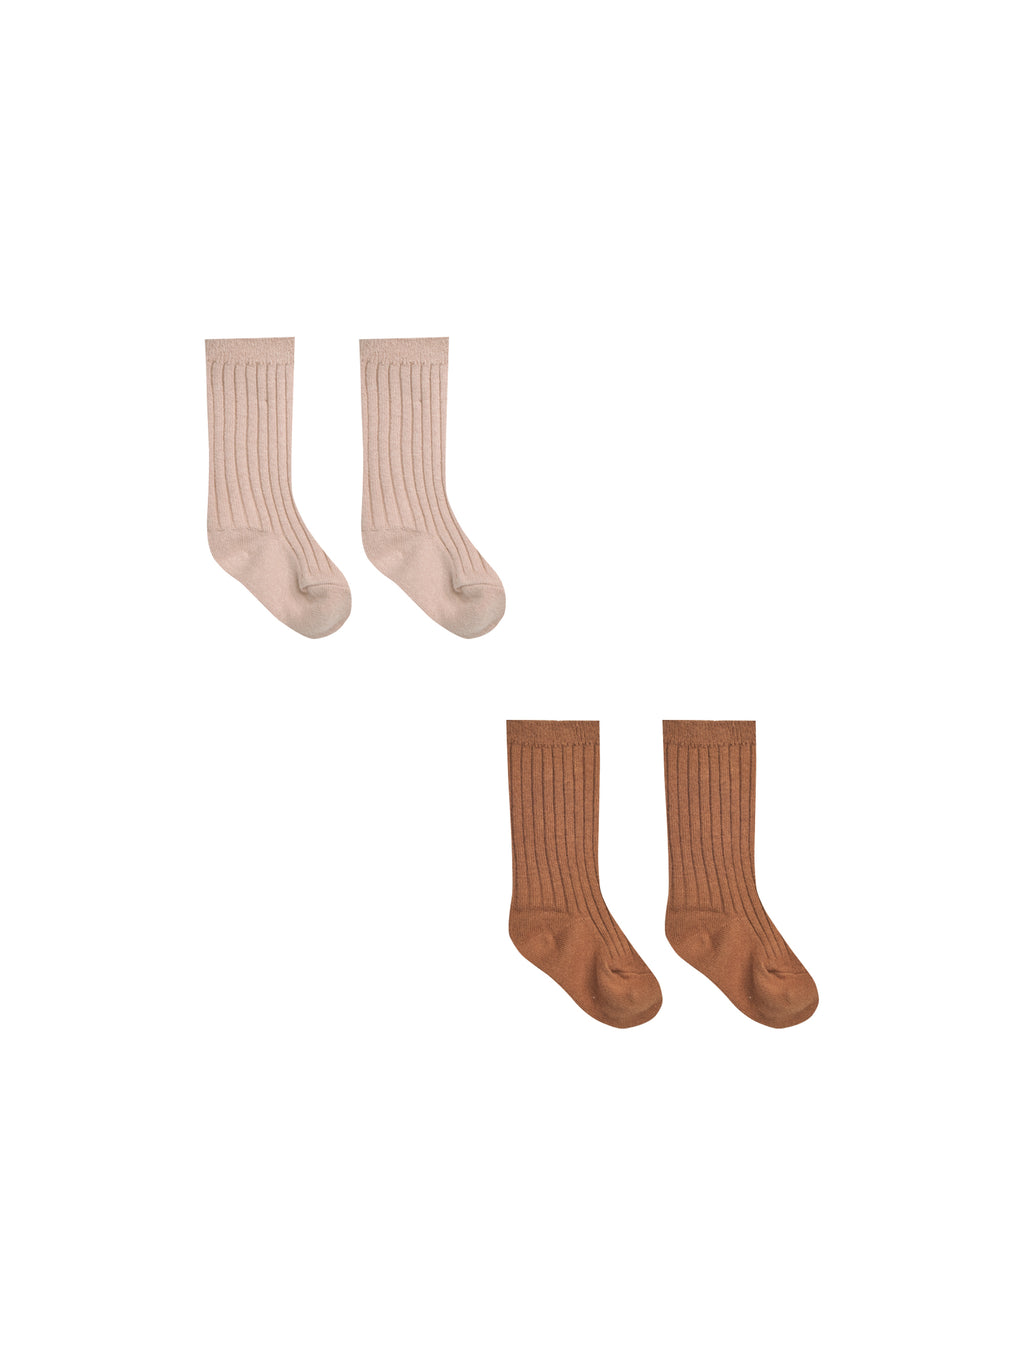 Quincy Mae Socks Set - Blush, Clay